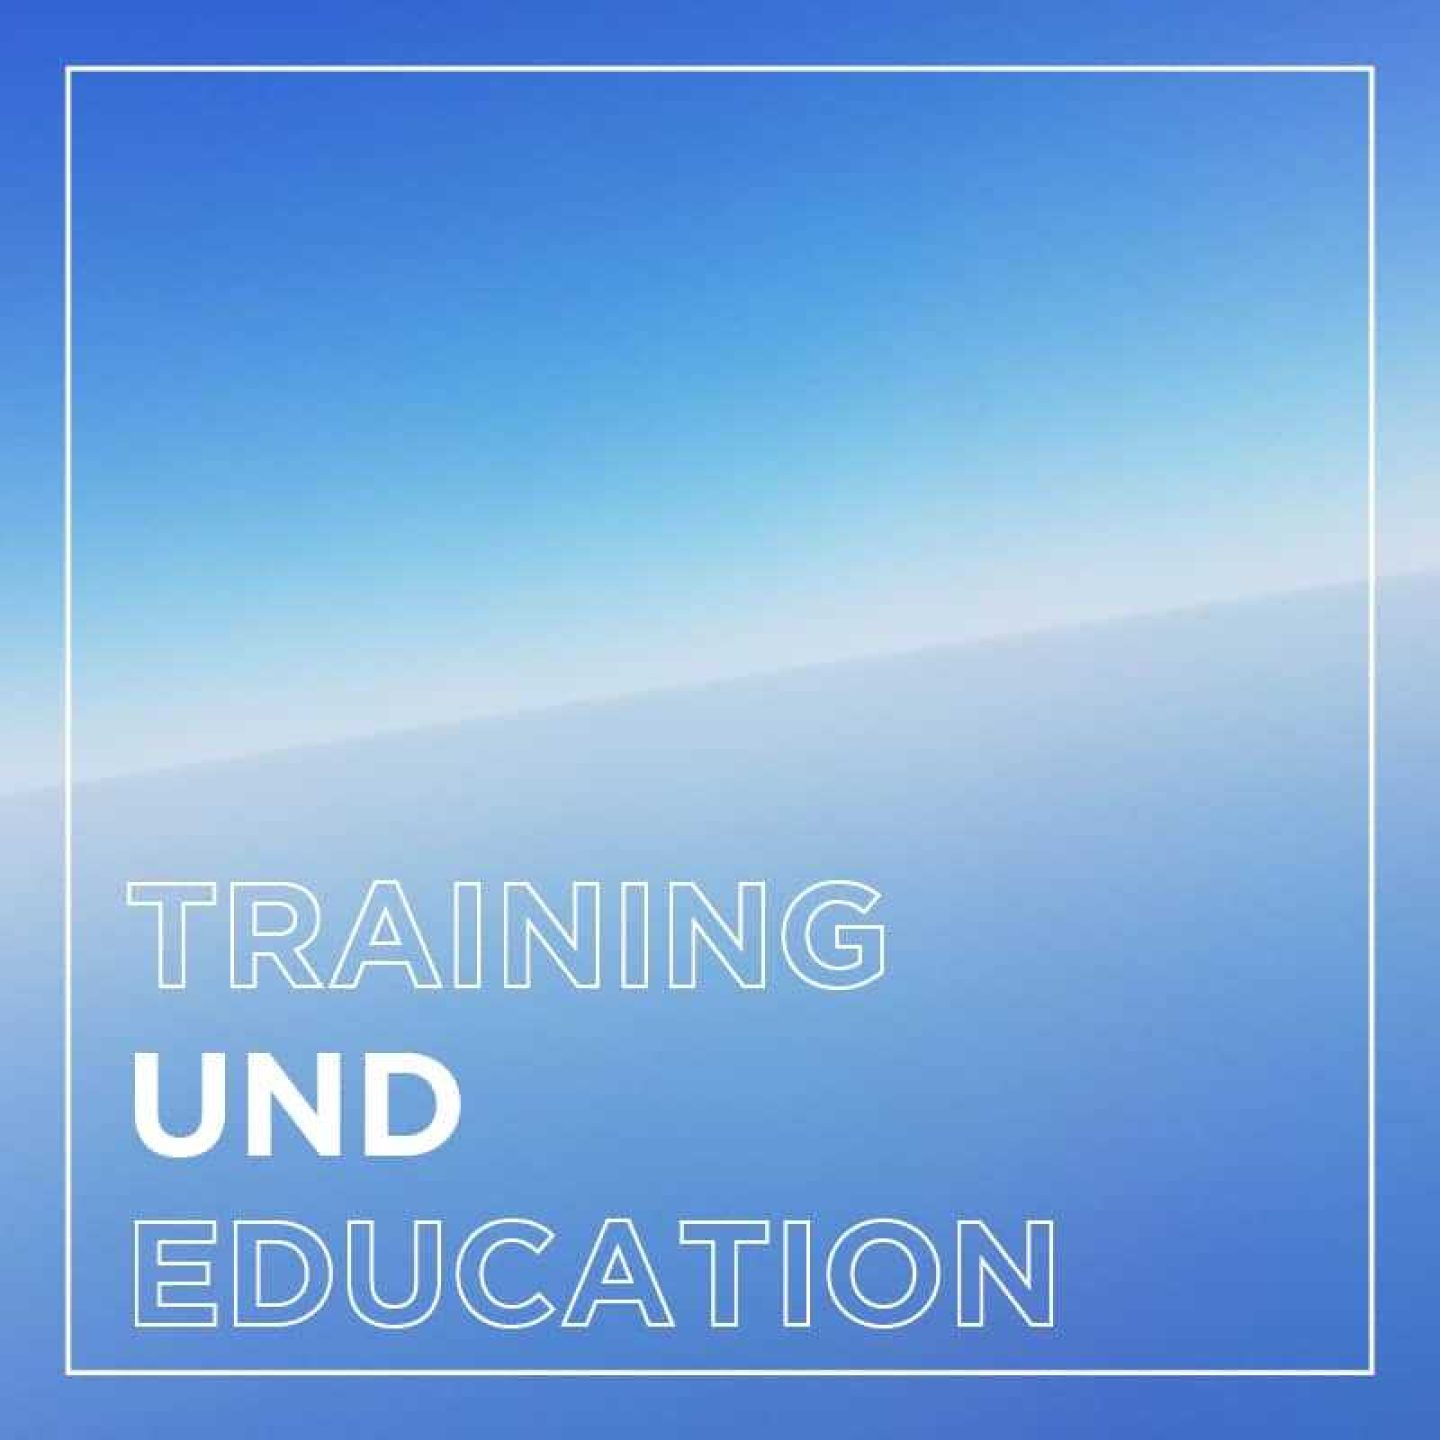 Kachel change management training und education